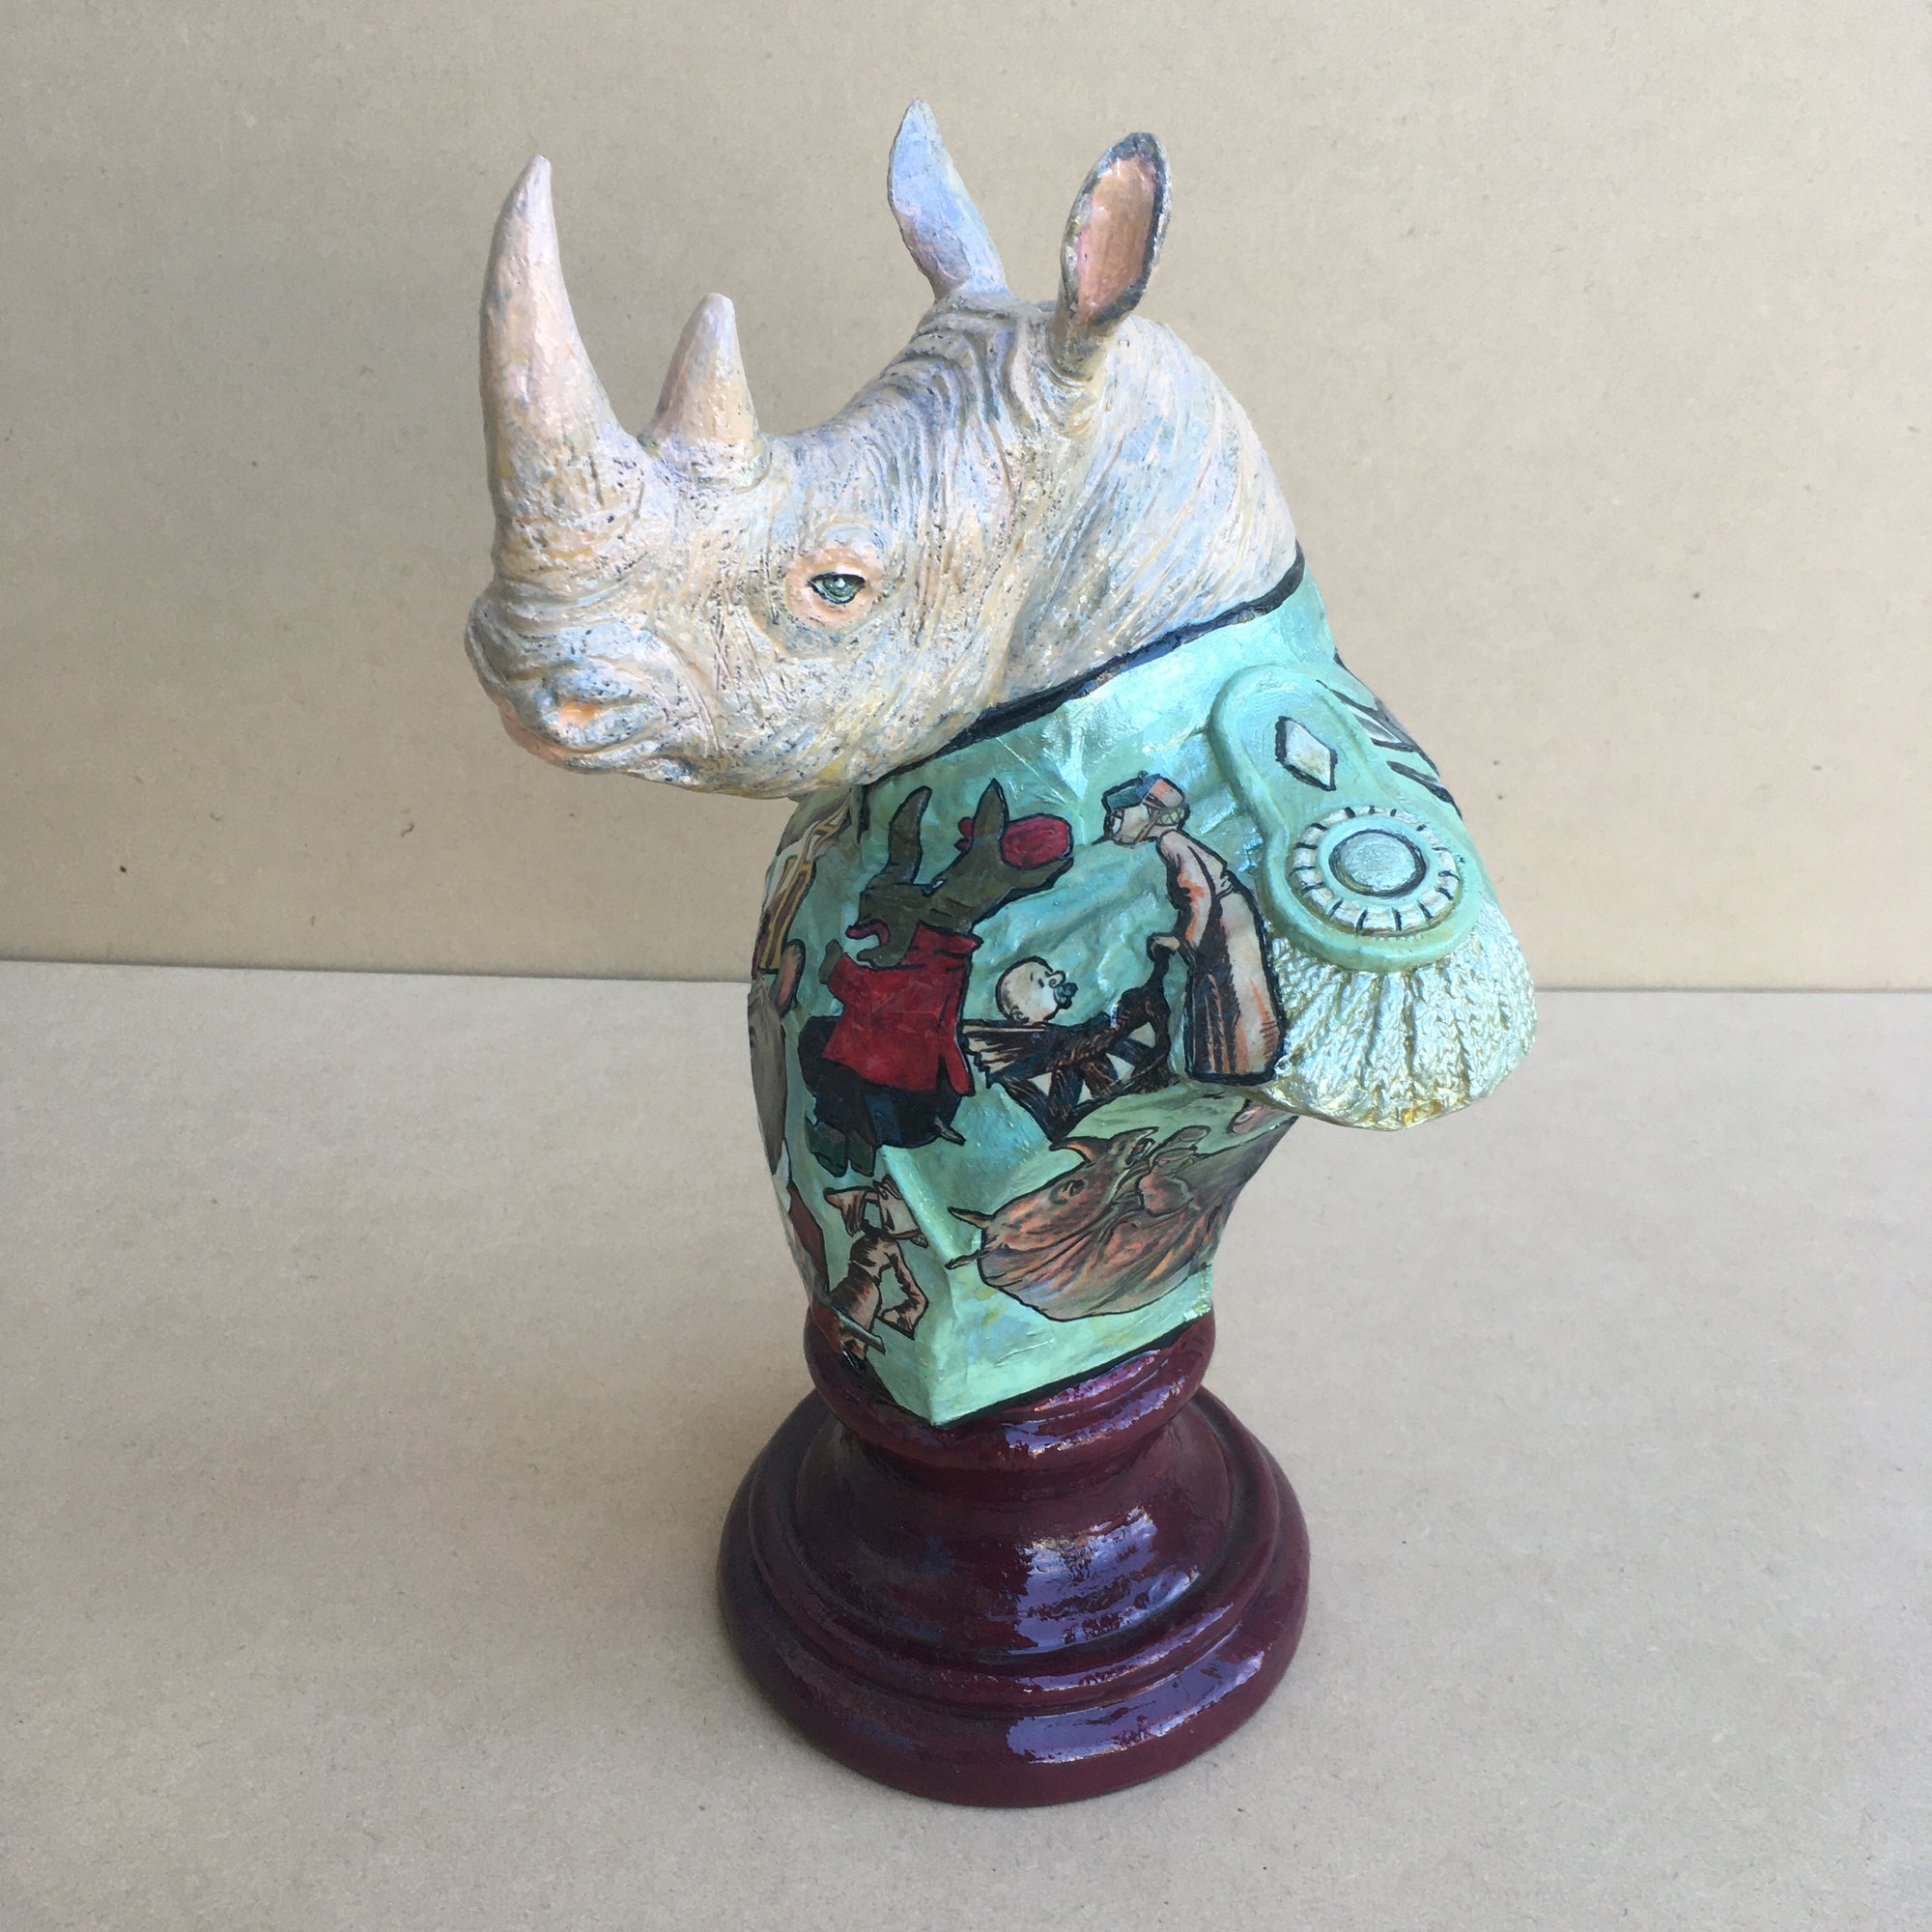 Stephen the Rhino - Mixed Media Sculpture